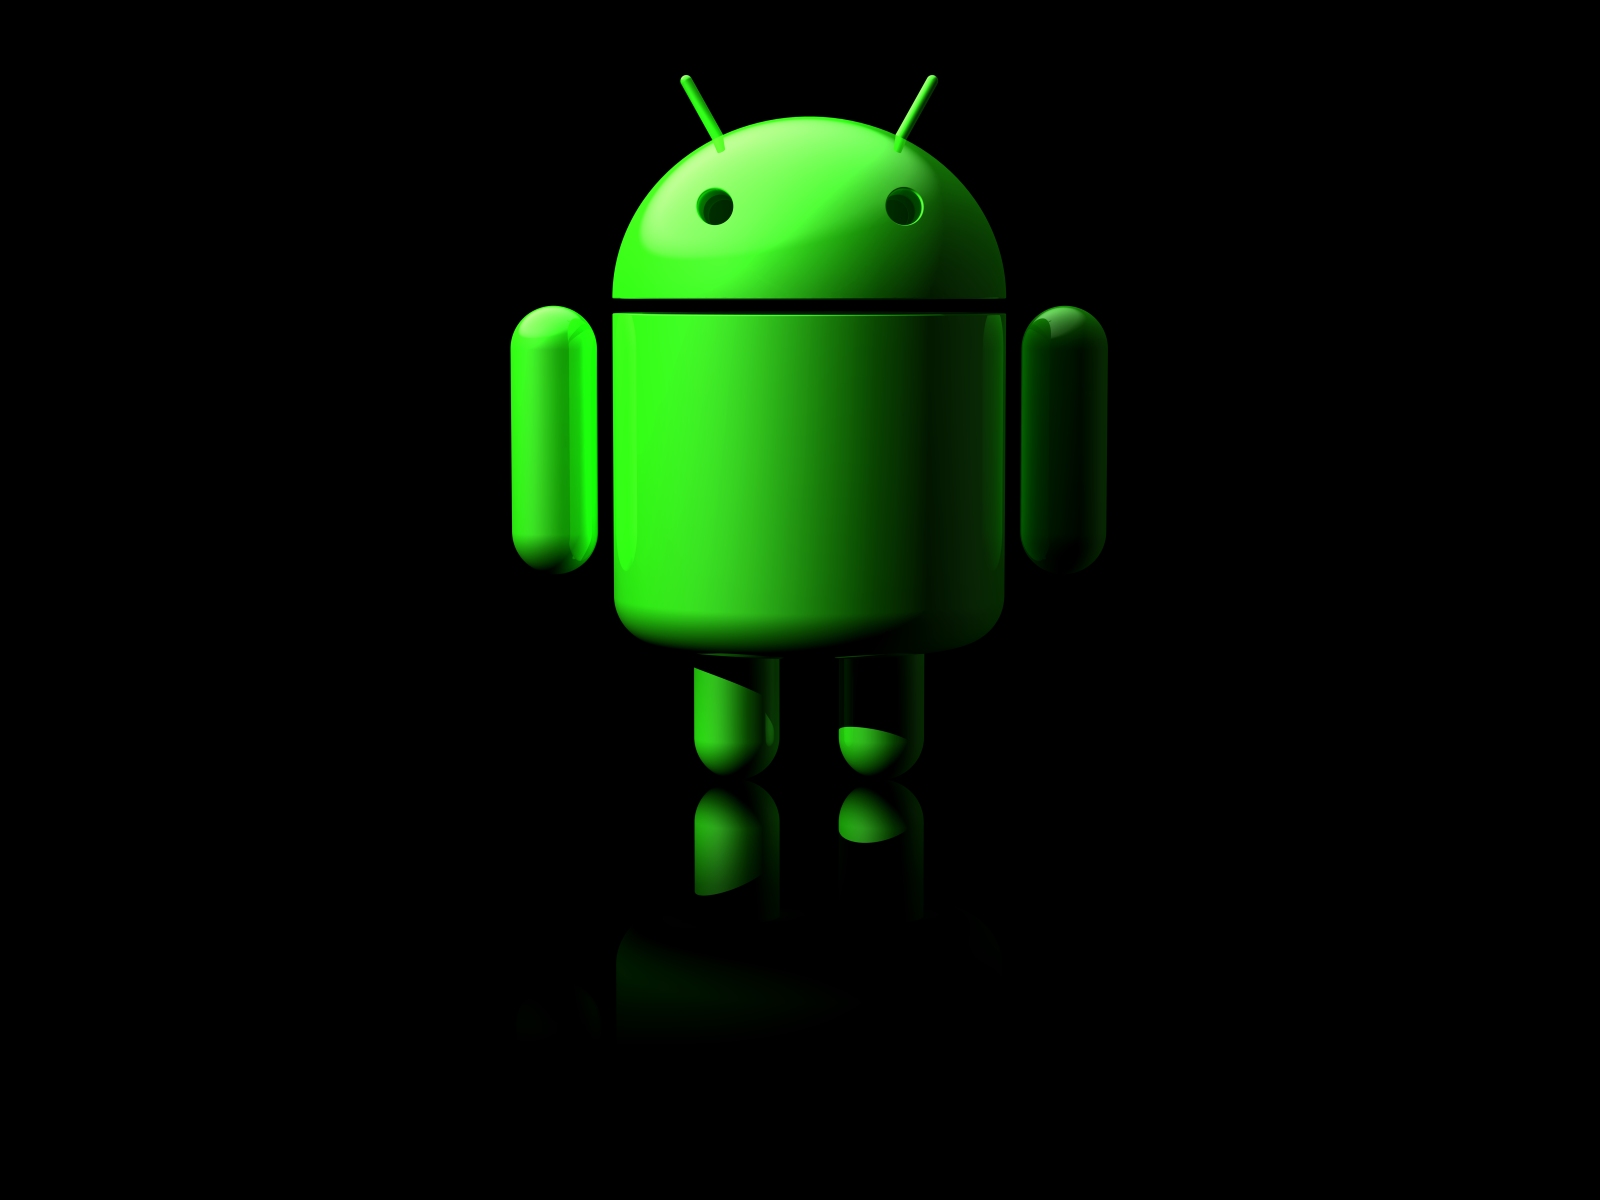  de Android 3D para android Fondos de pantalla de Android 3D